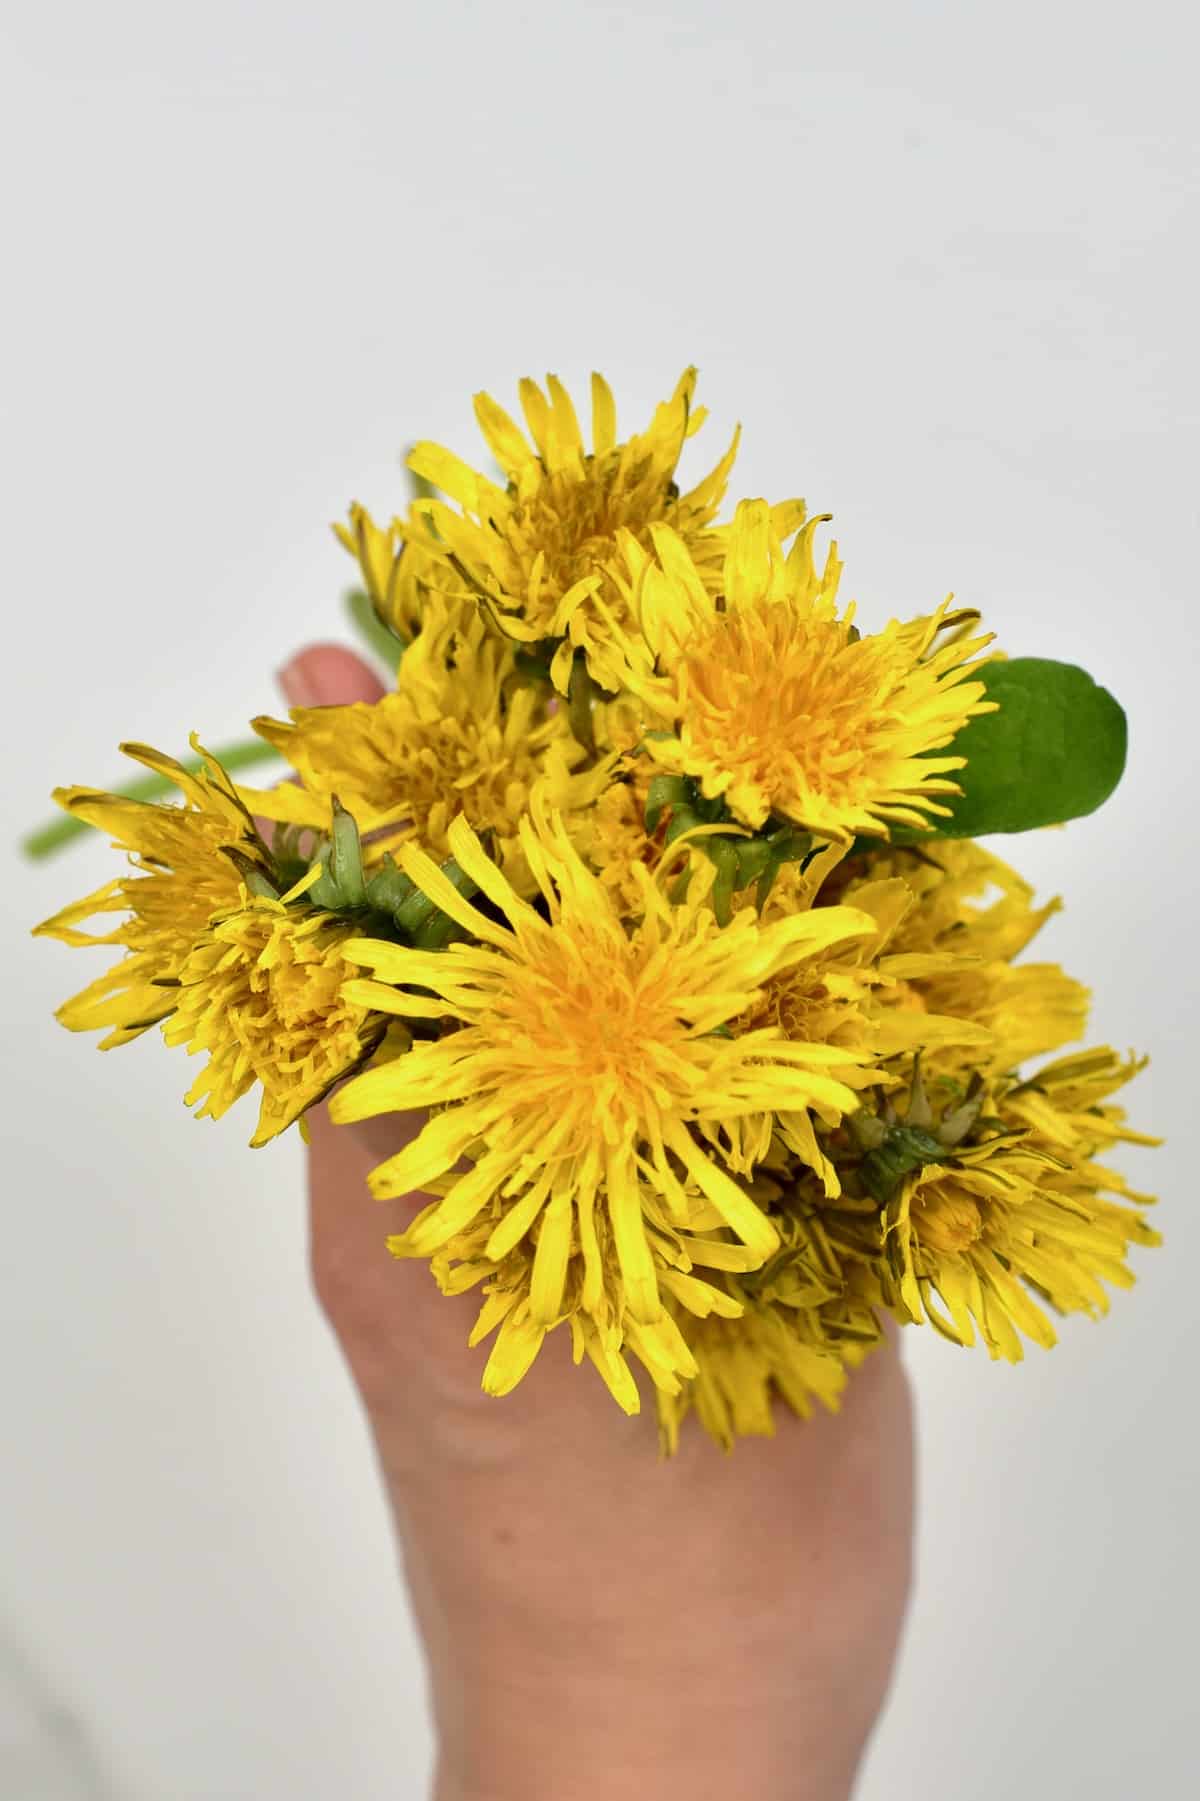 Hand holding dandelions